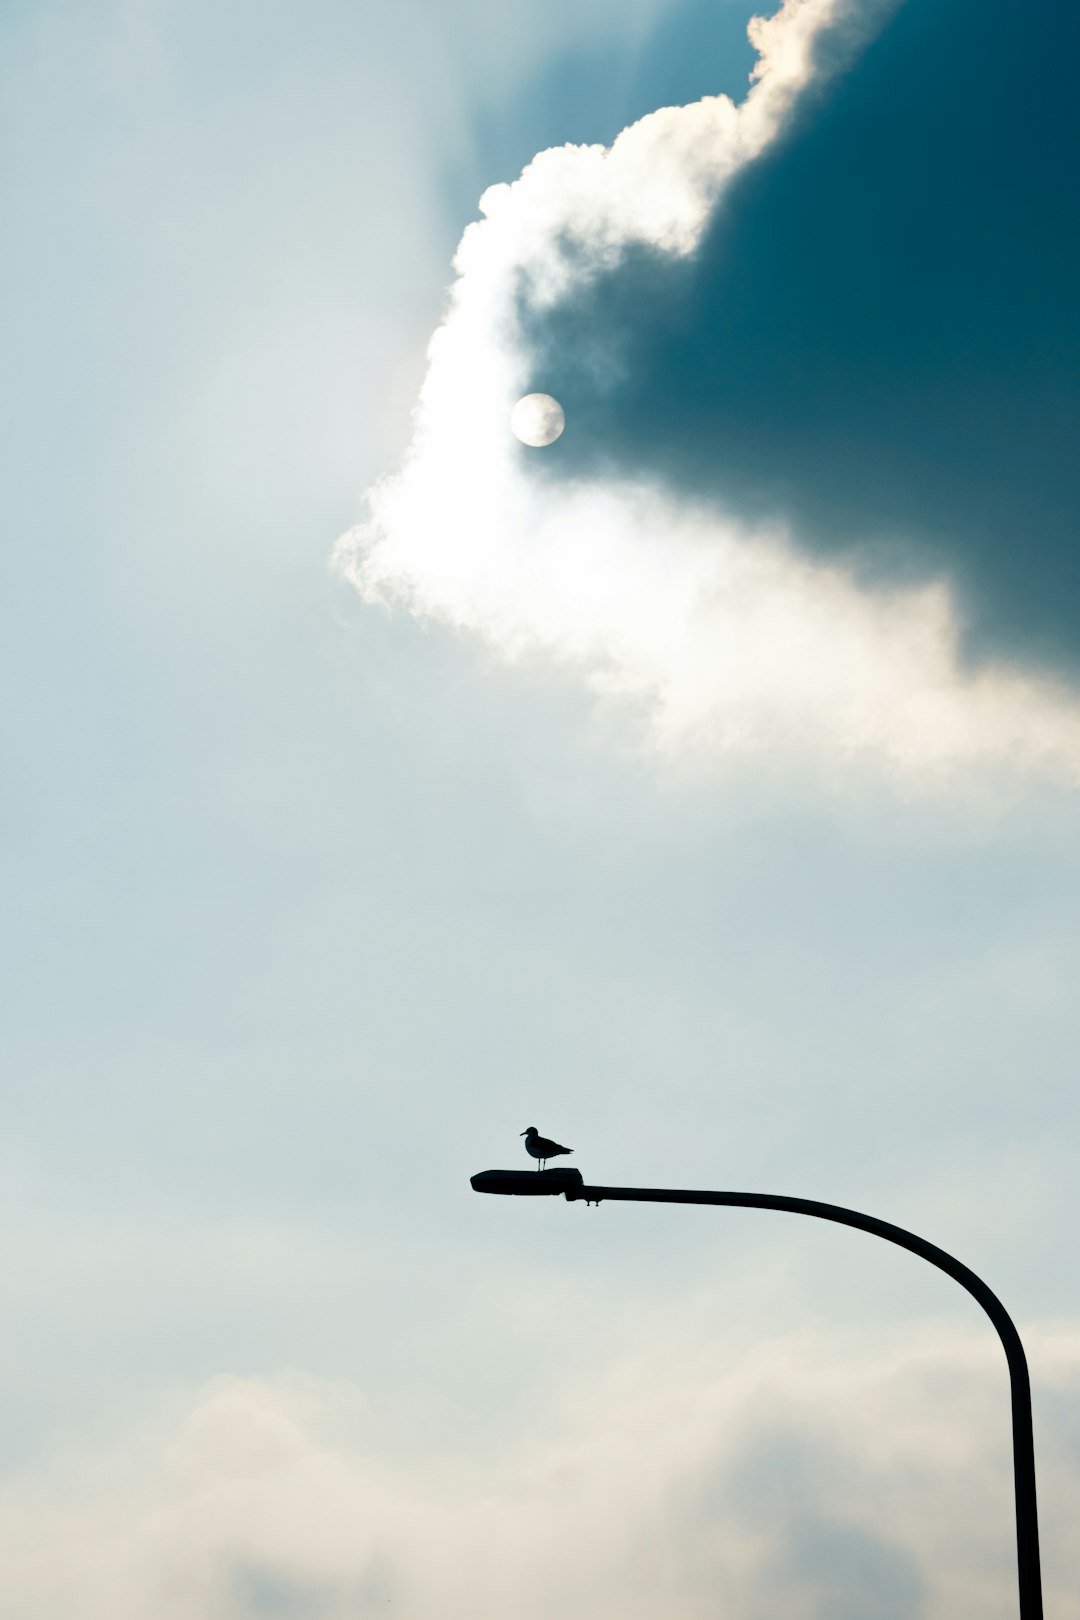 black bird on black metal pole under blue sky during daytime